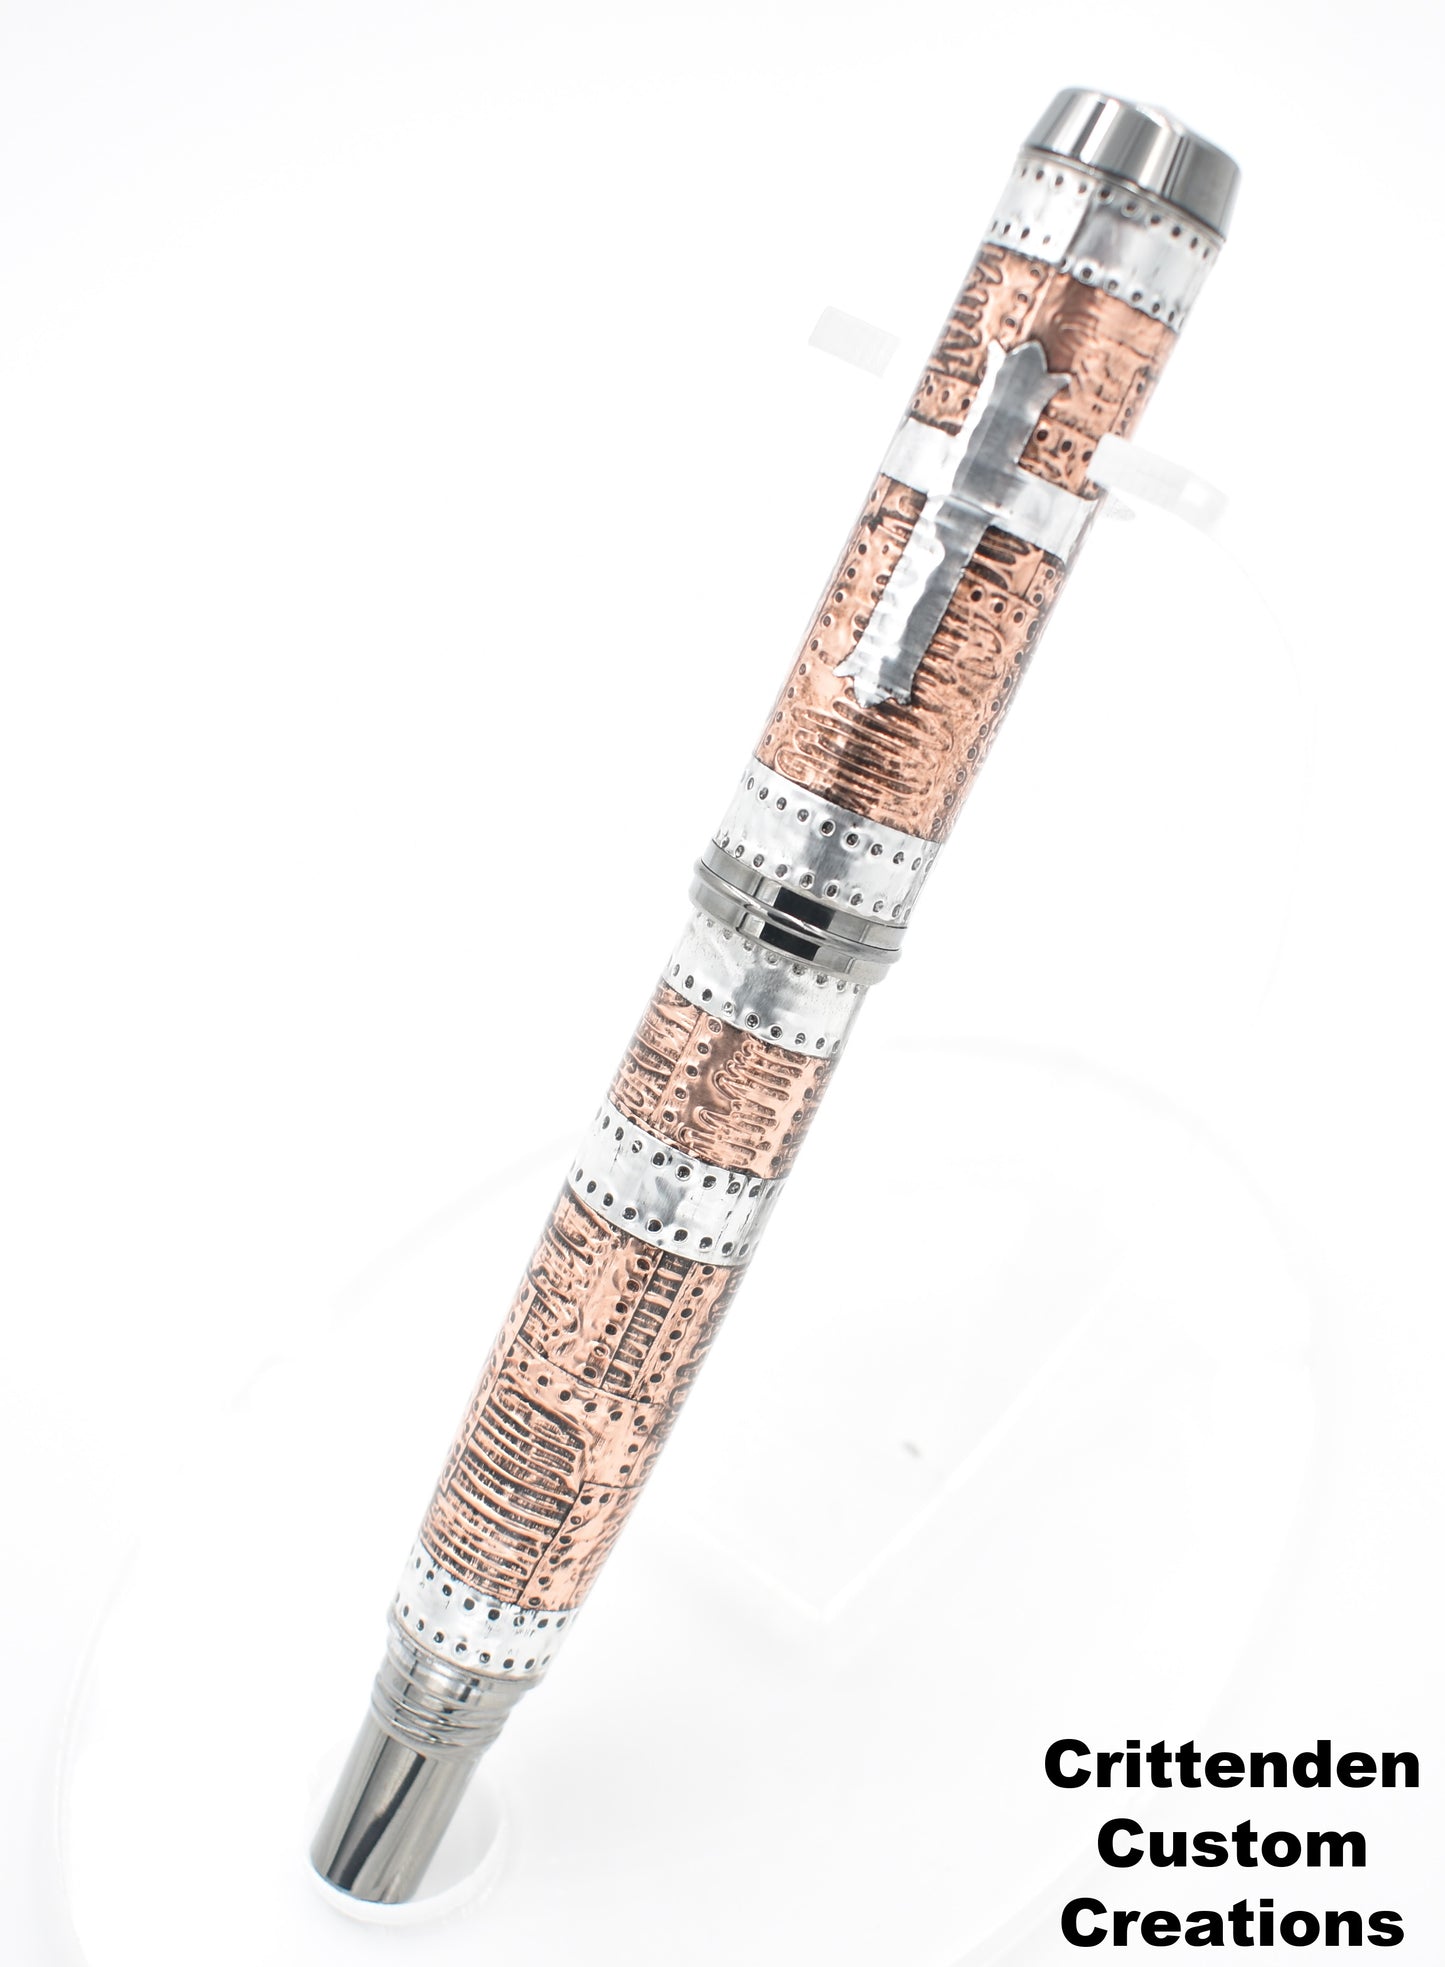 Steampunk Inspired design featuring a Cross  - Jr. George Fountain Pen